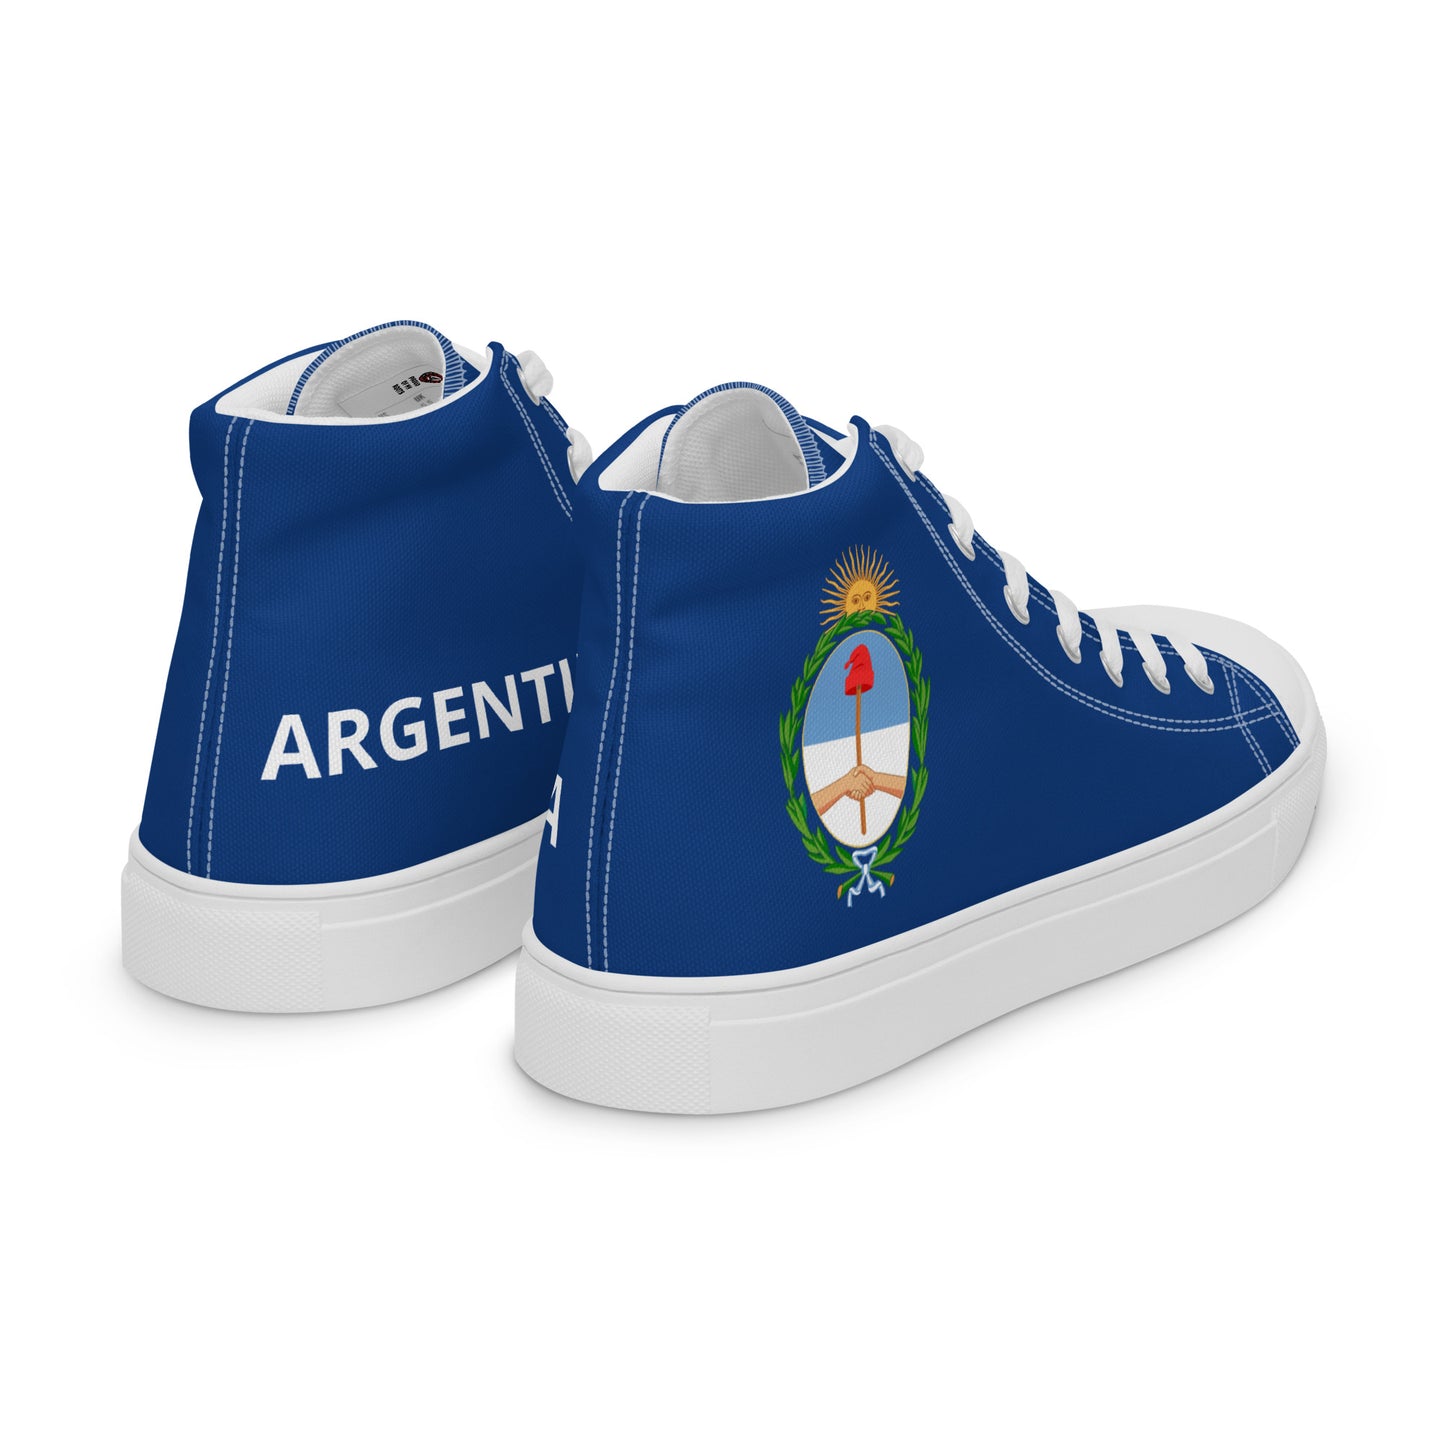 Argentina - Women - Blue - High top shoes